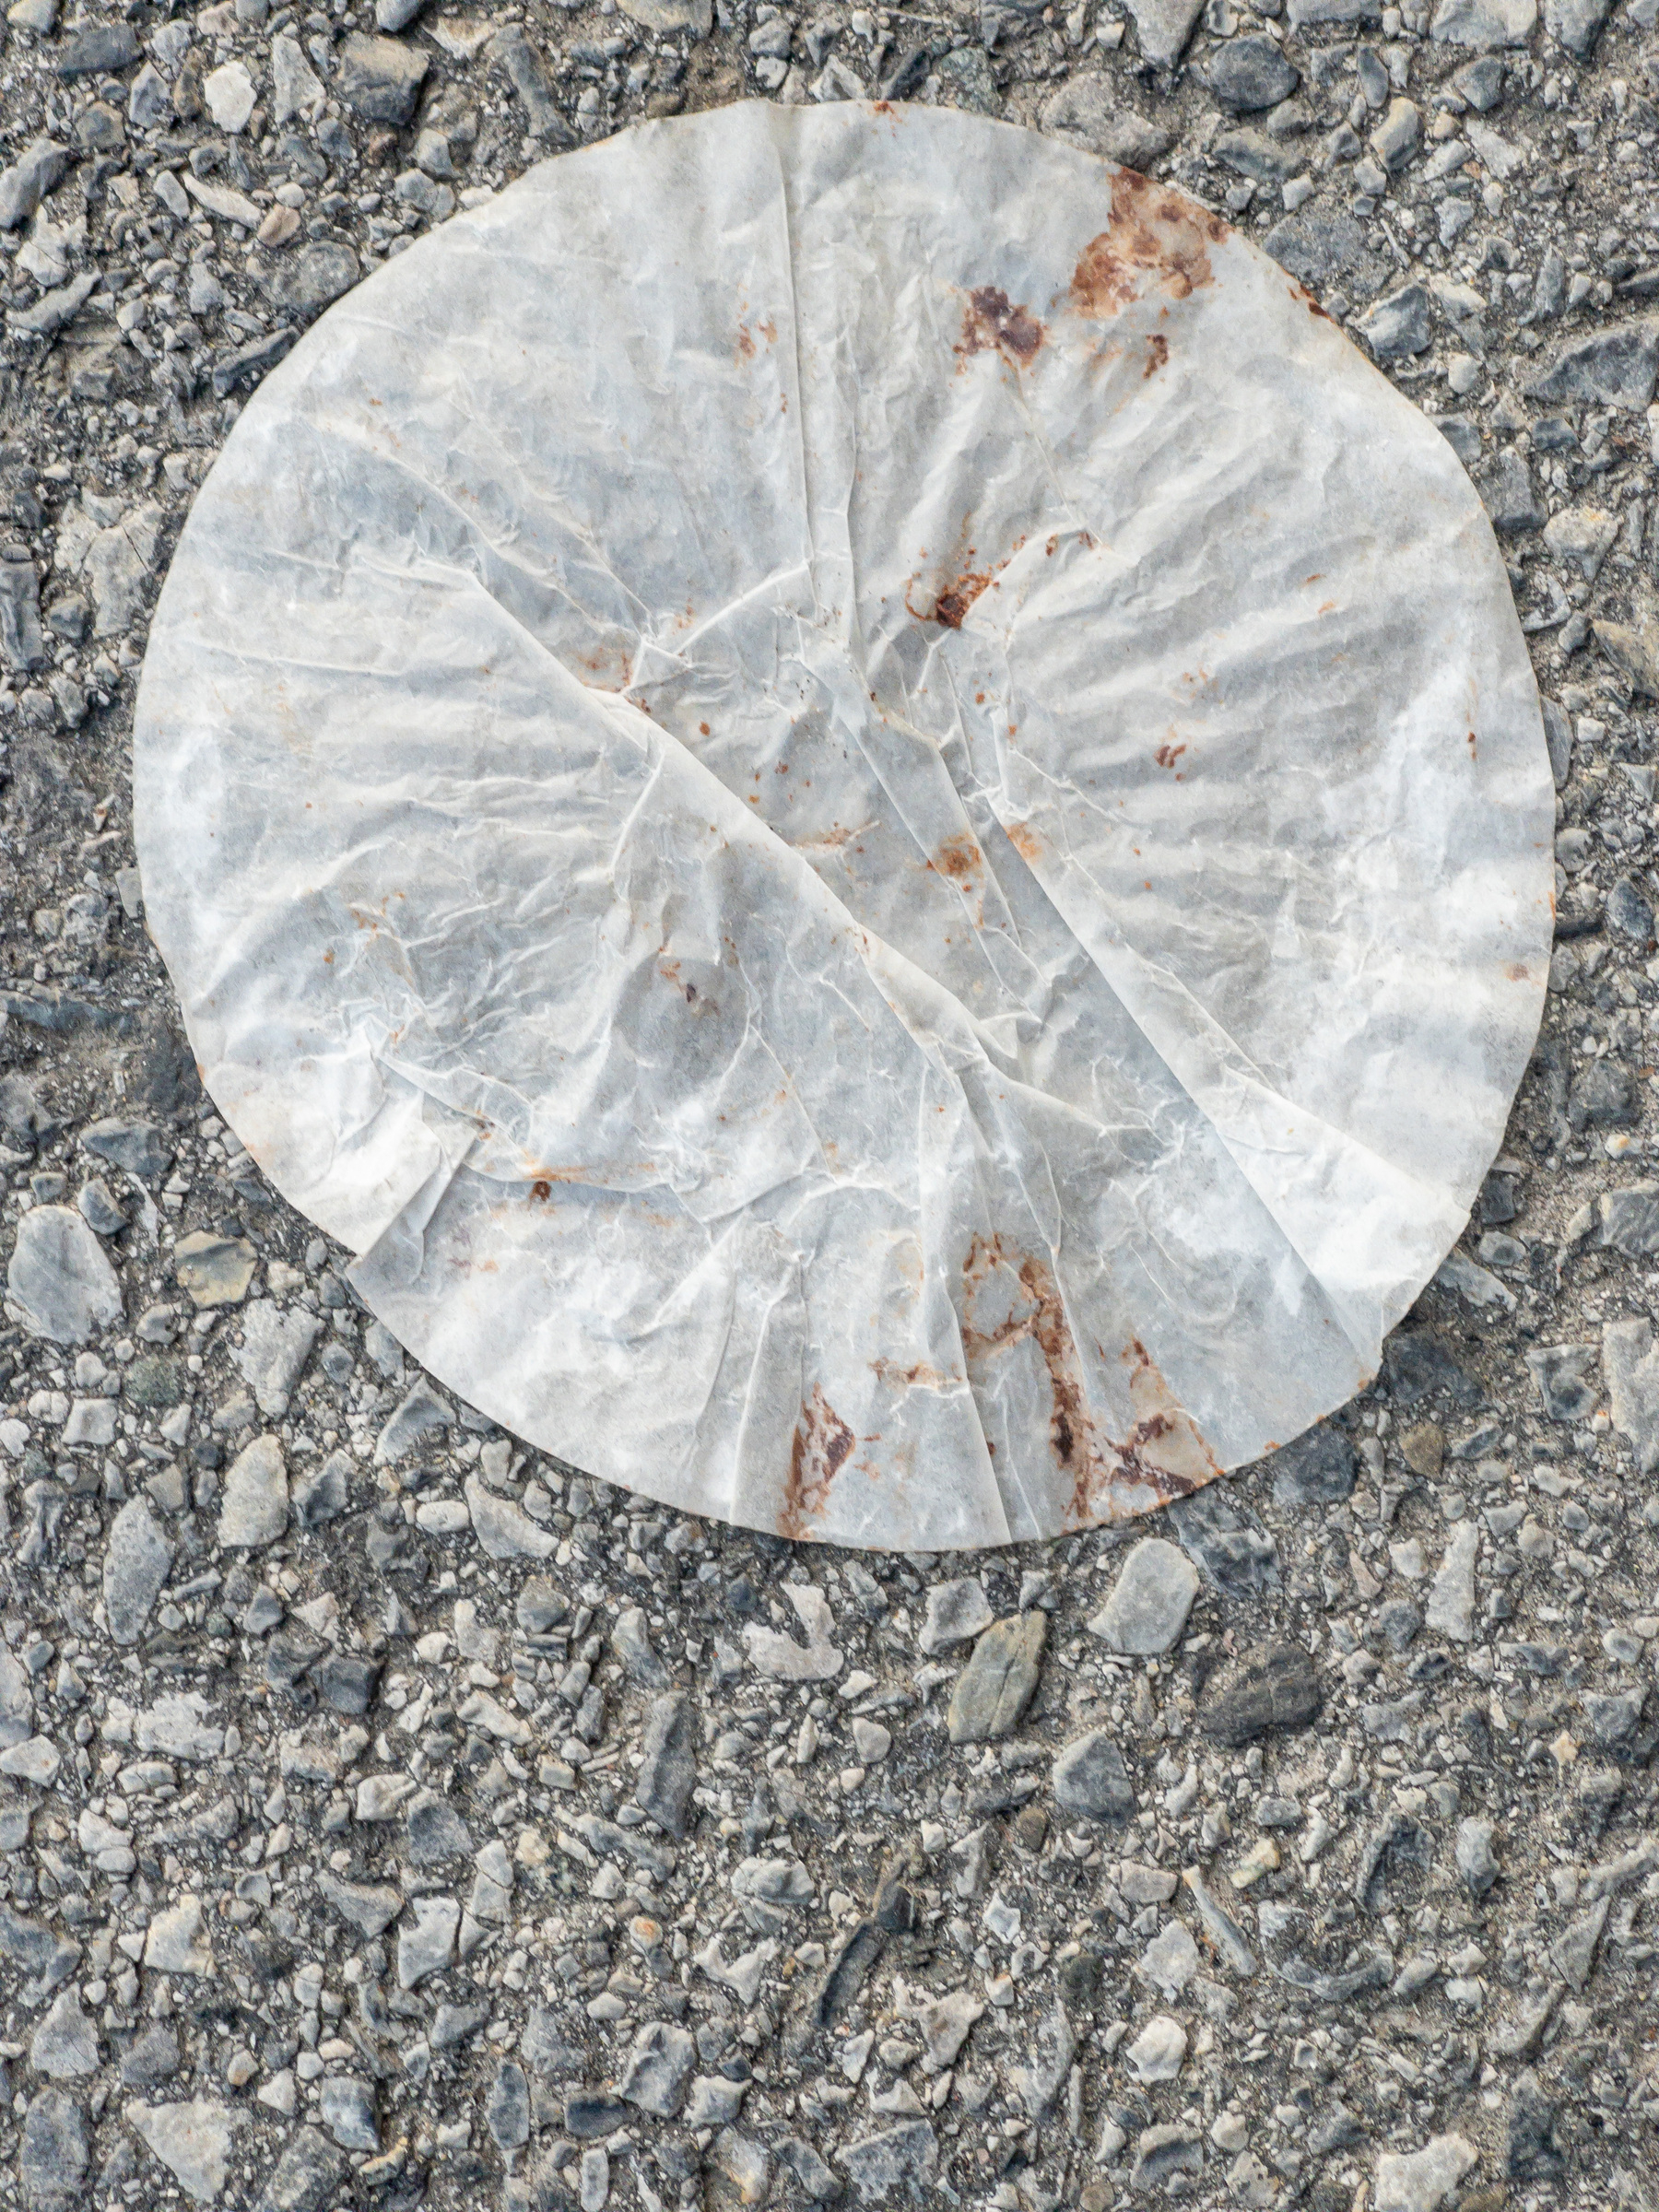 Flattened circular muffin paper on asphalt pavement.